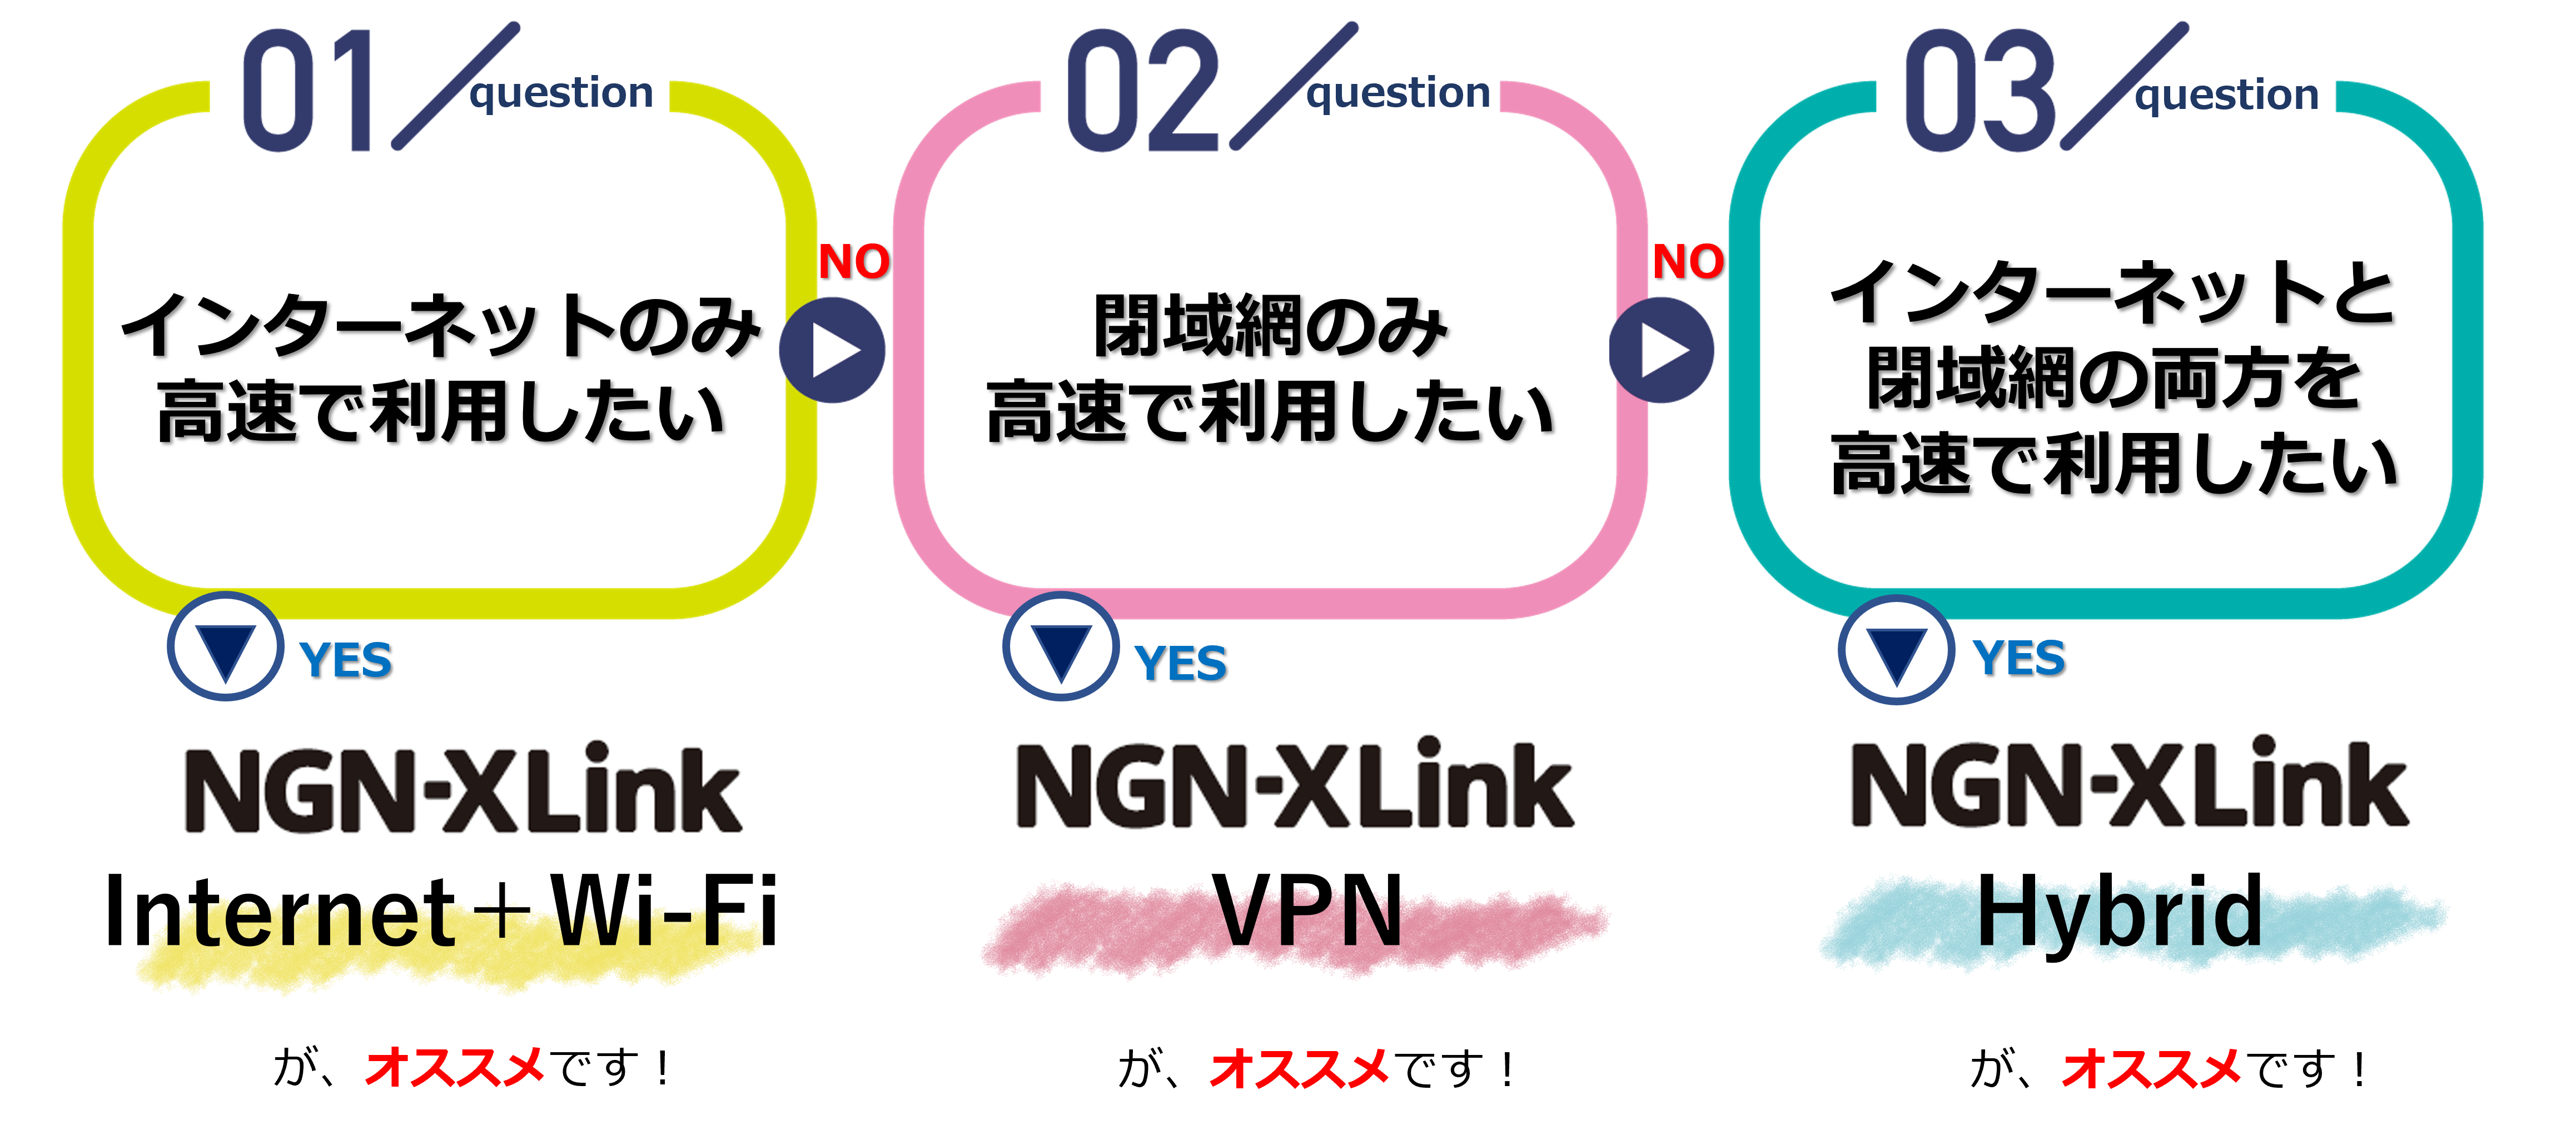 Internet＋Wi-Fi　VPN  Hybrid